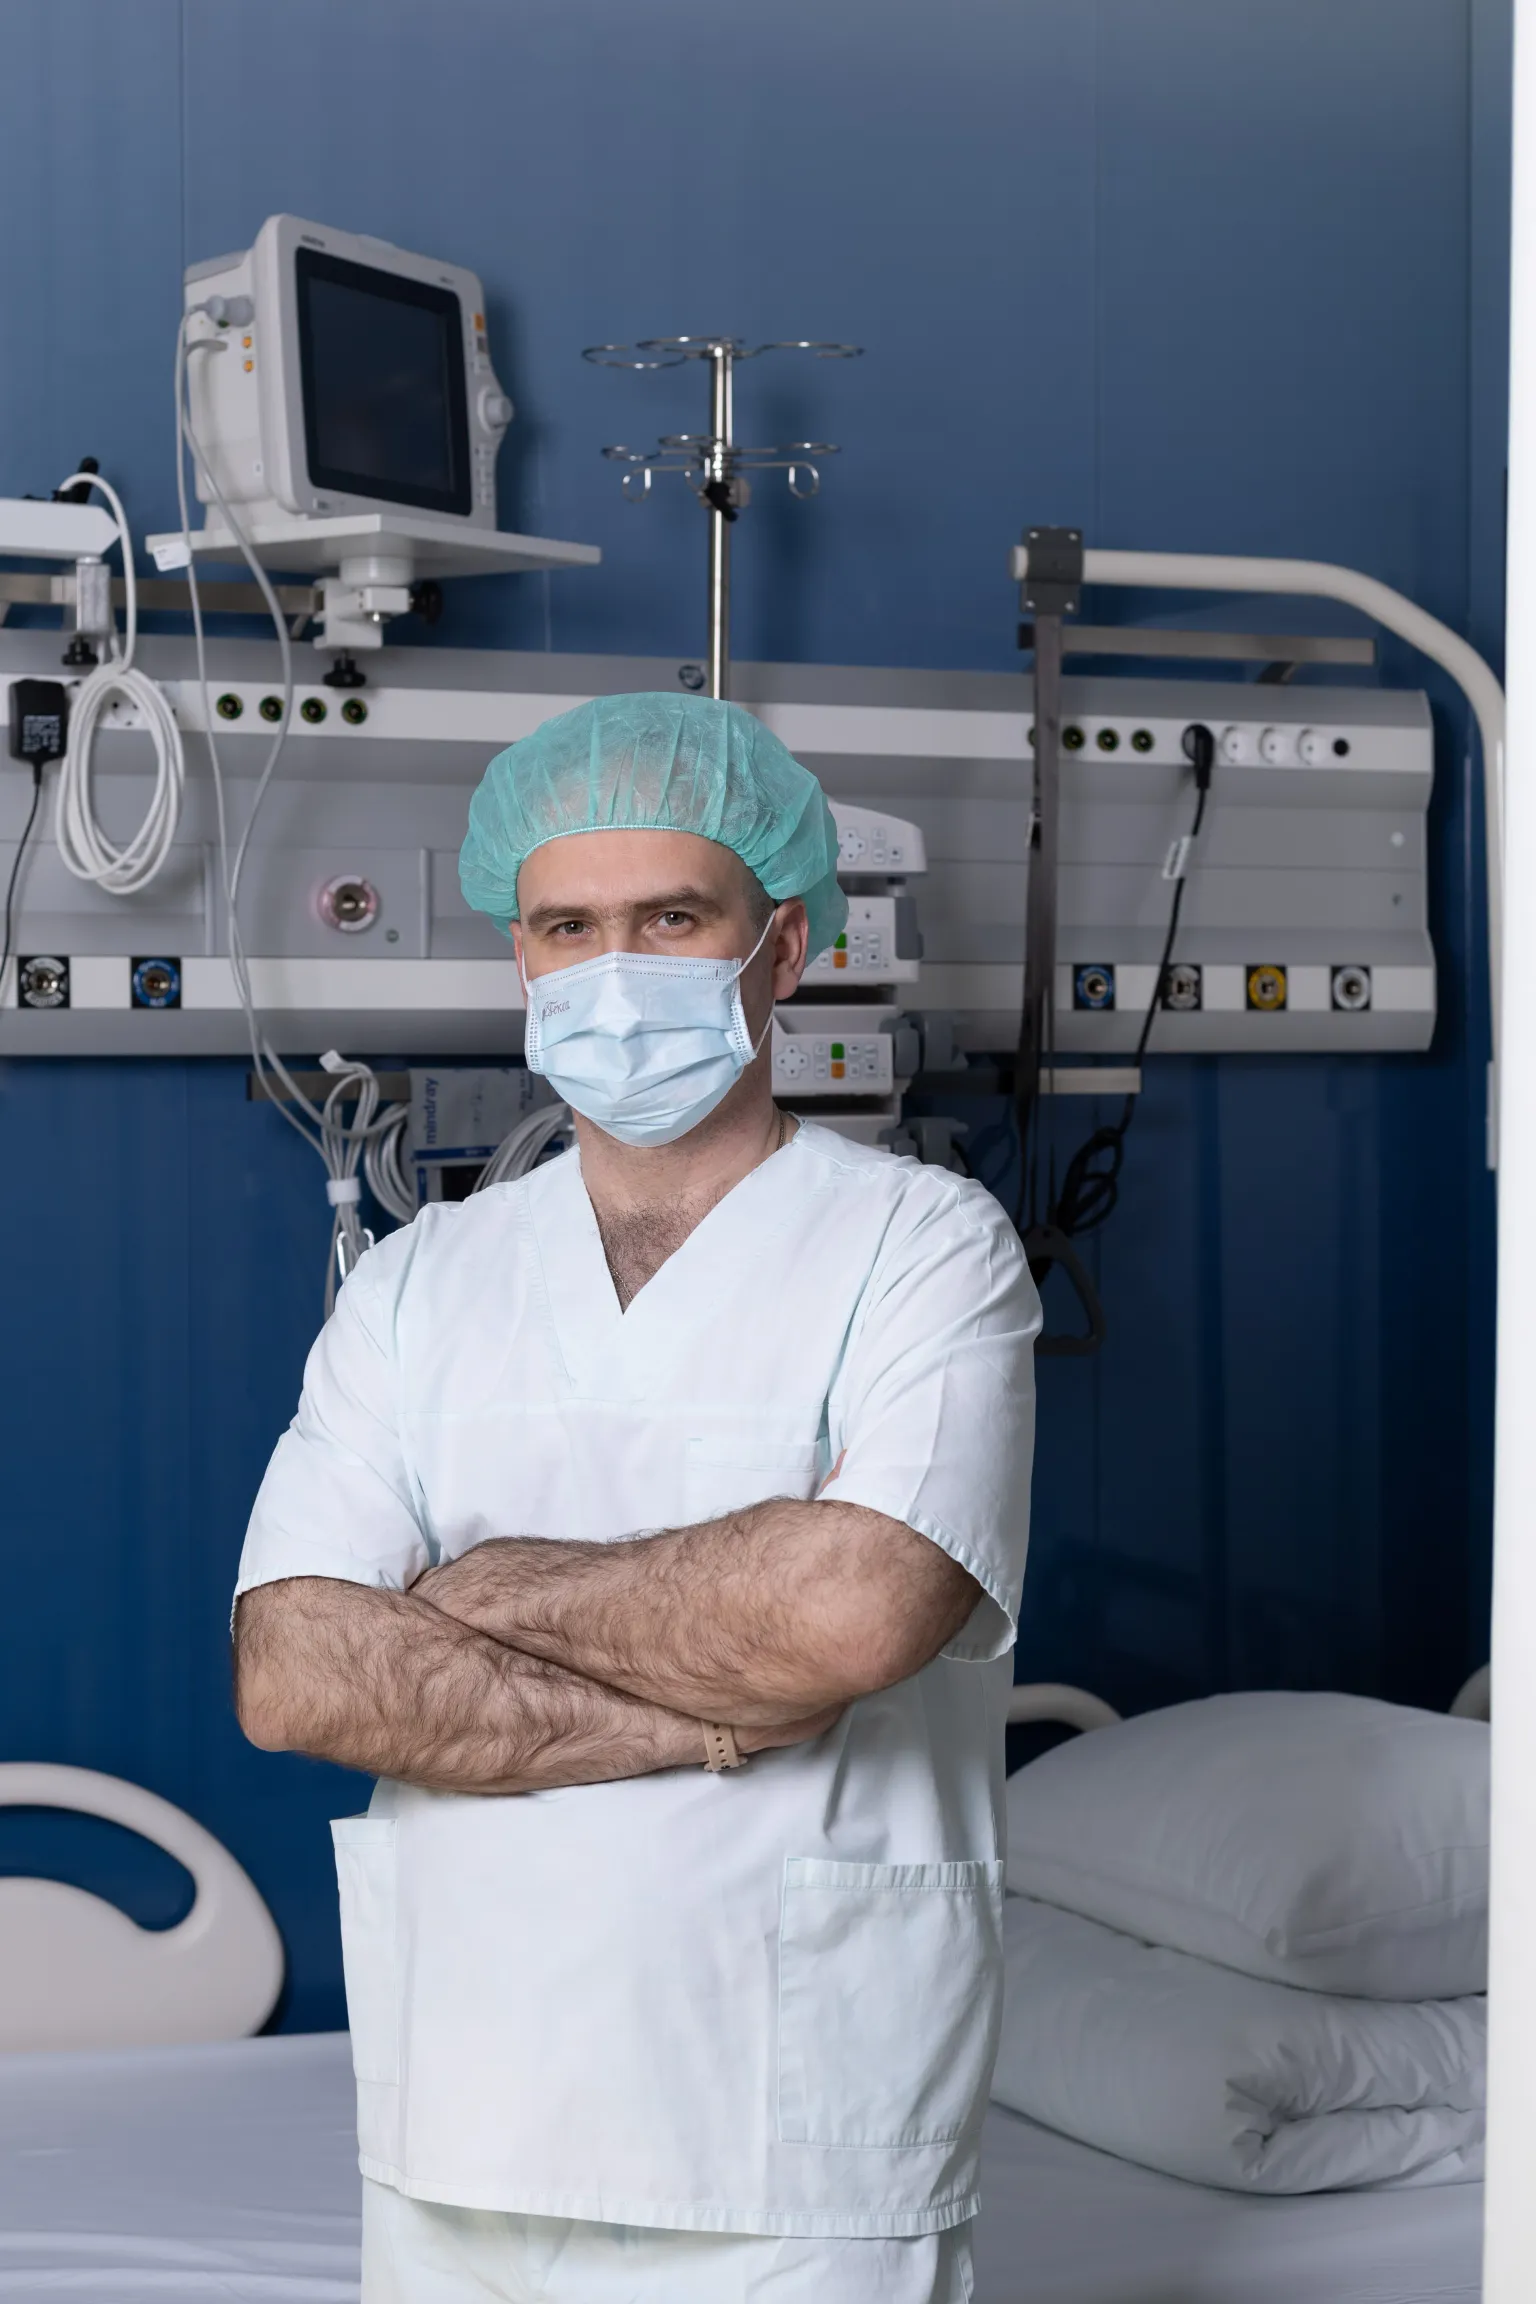 Анестезиологи-реаниматологи контролируют операцию от начала до конца